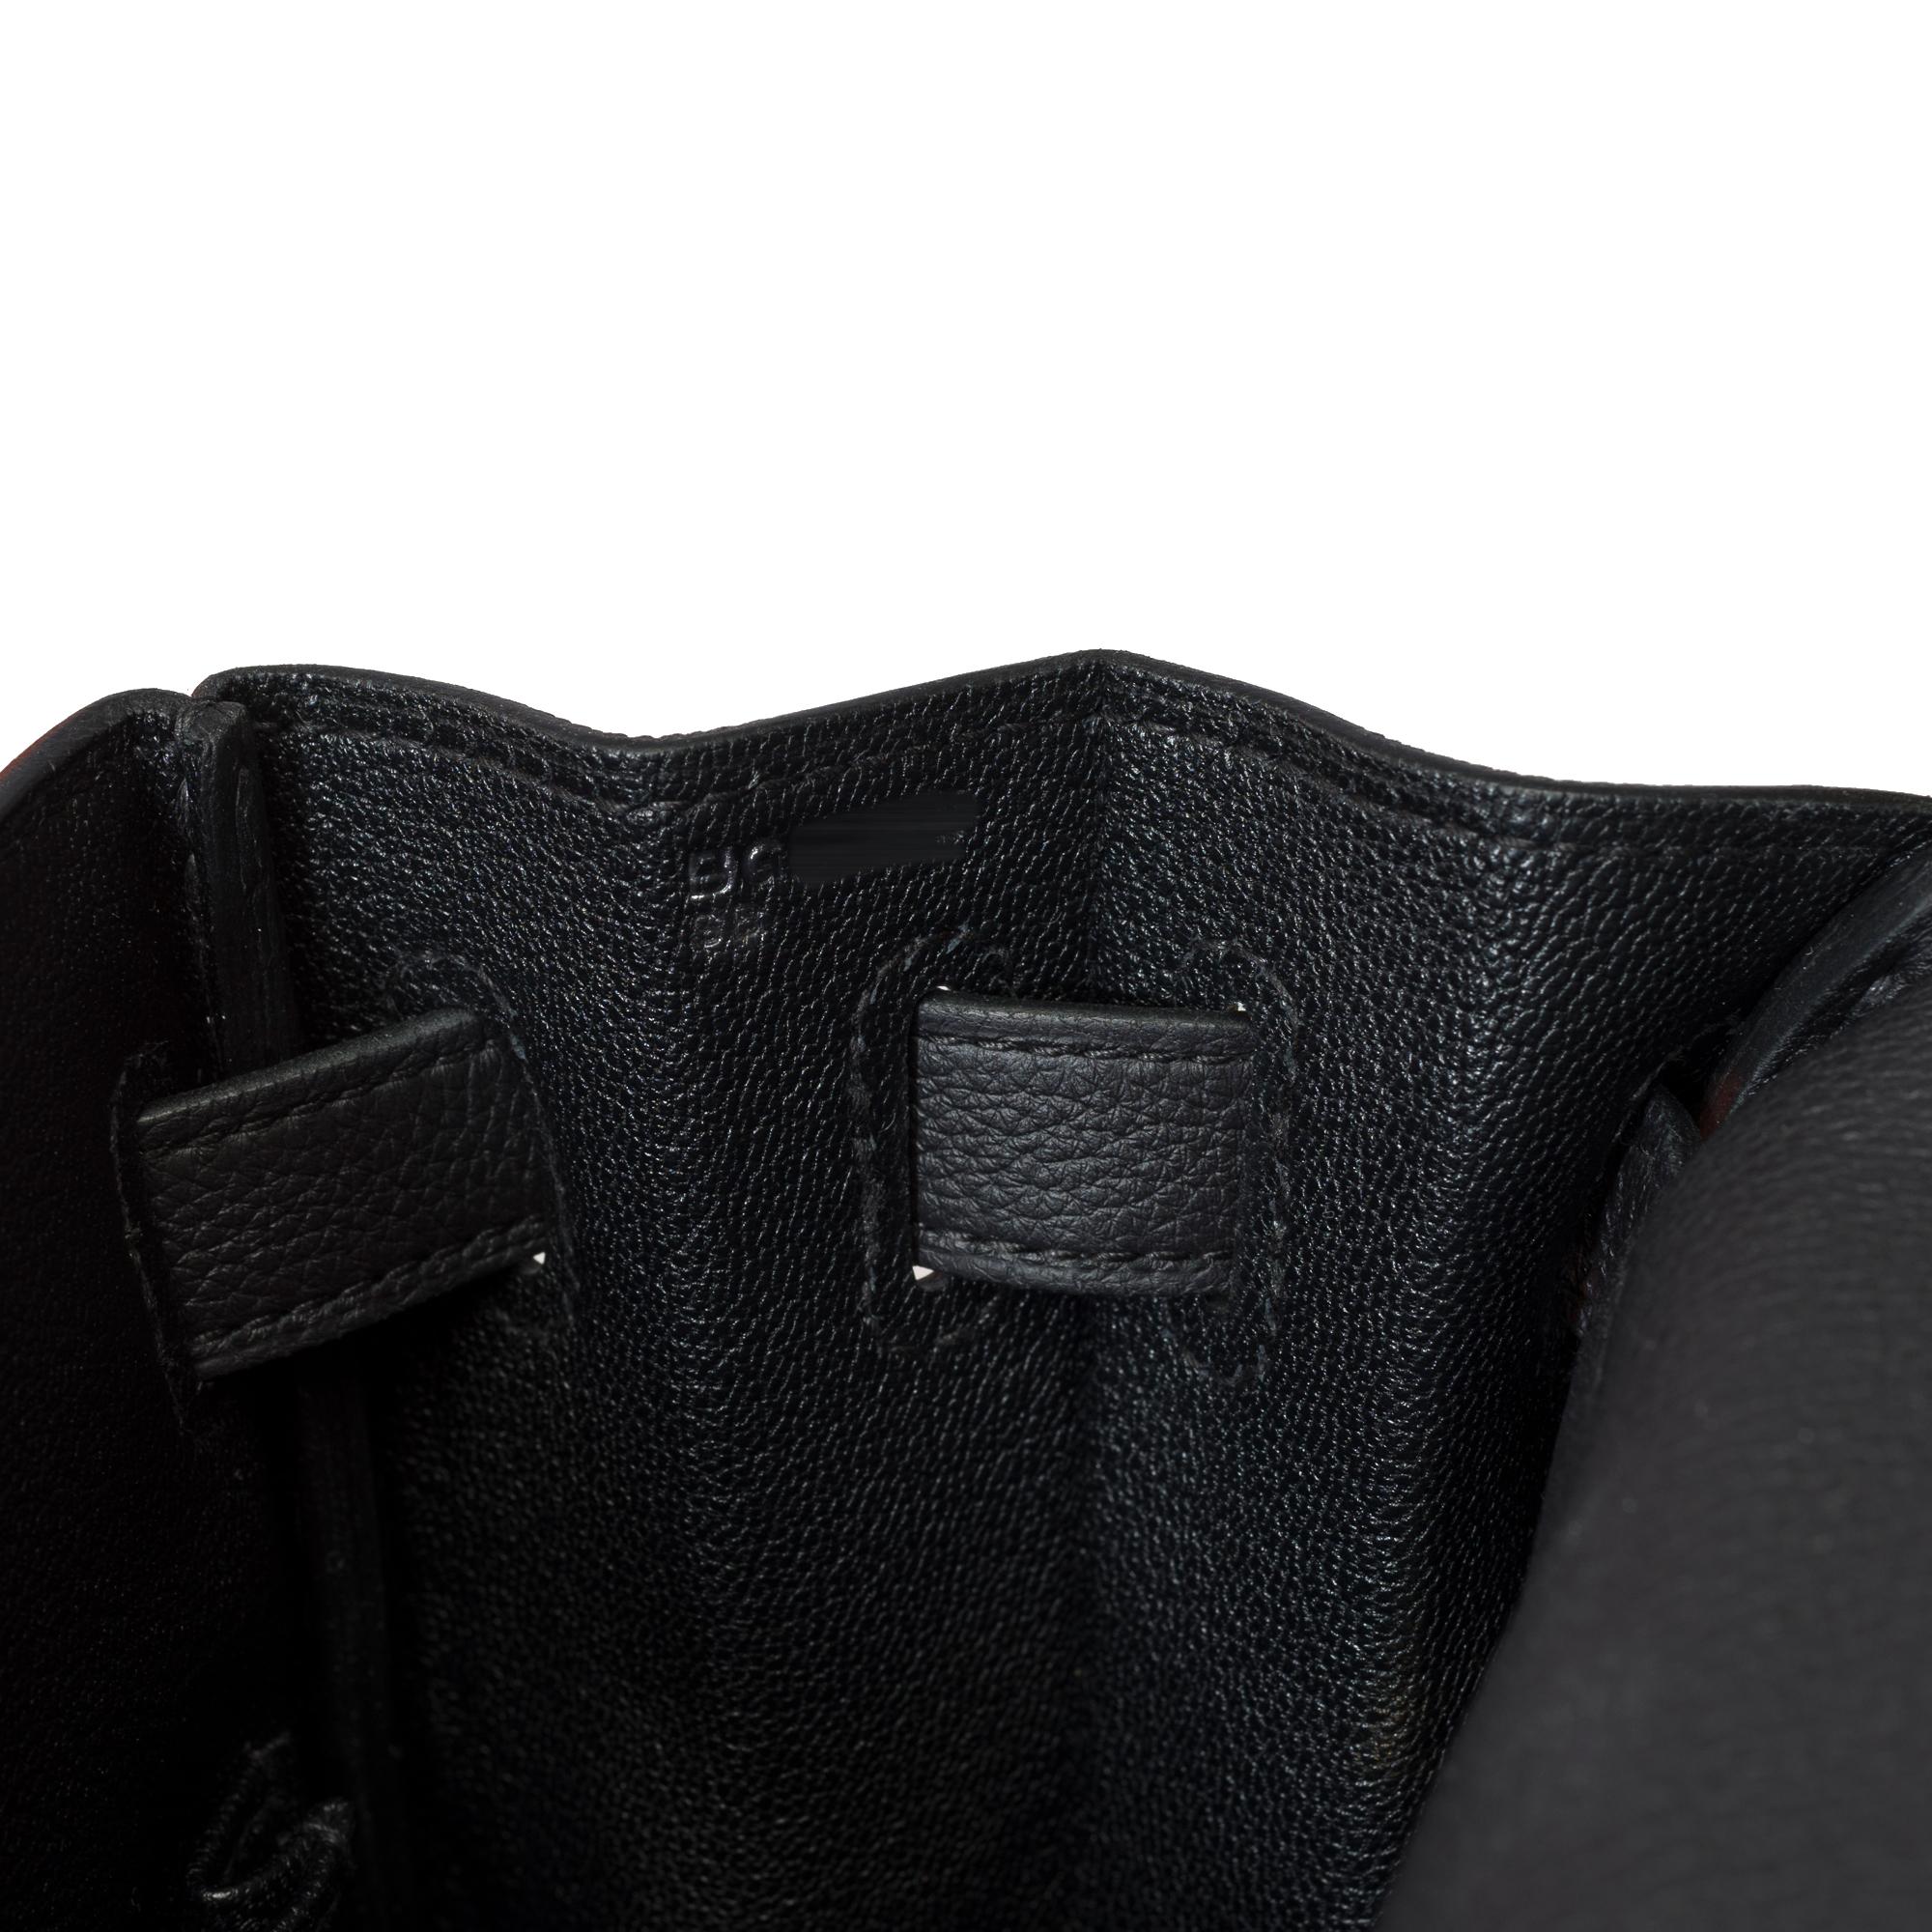 New Hermès Kelly 32 retourne handbag strap in Black Togo leather, GHW 4